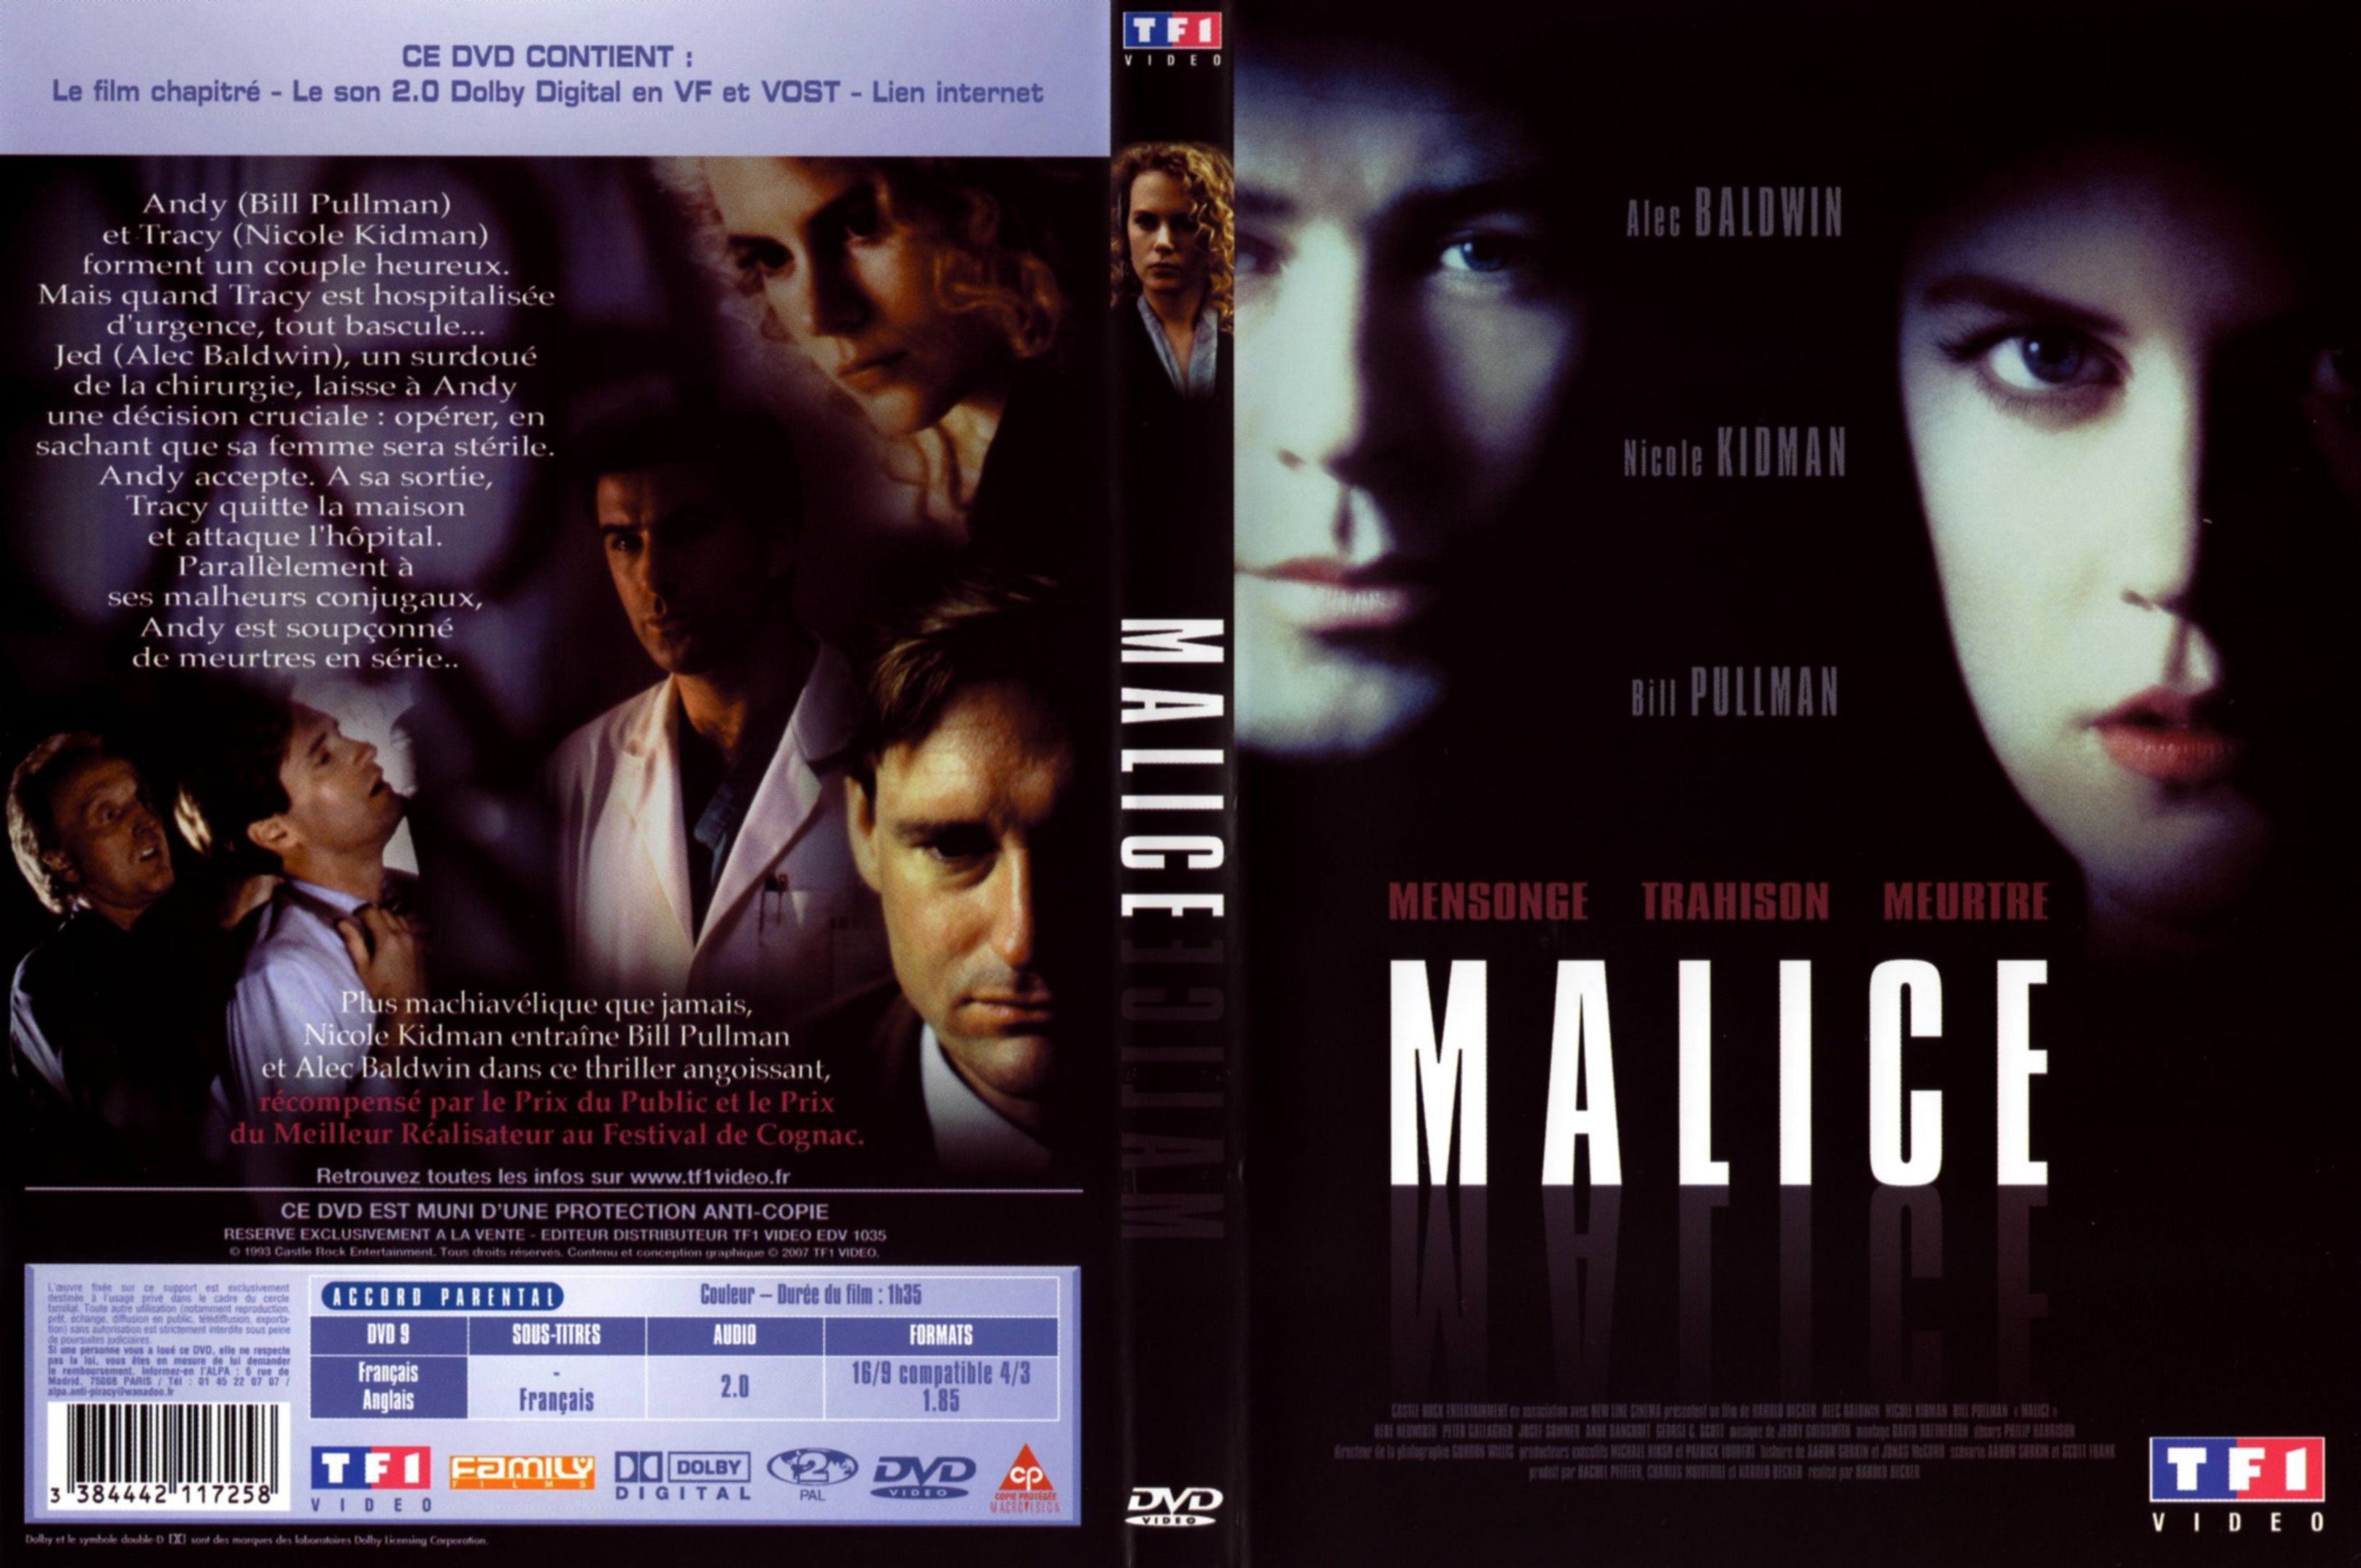 Jaquette DVD Malice v3